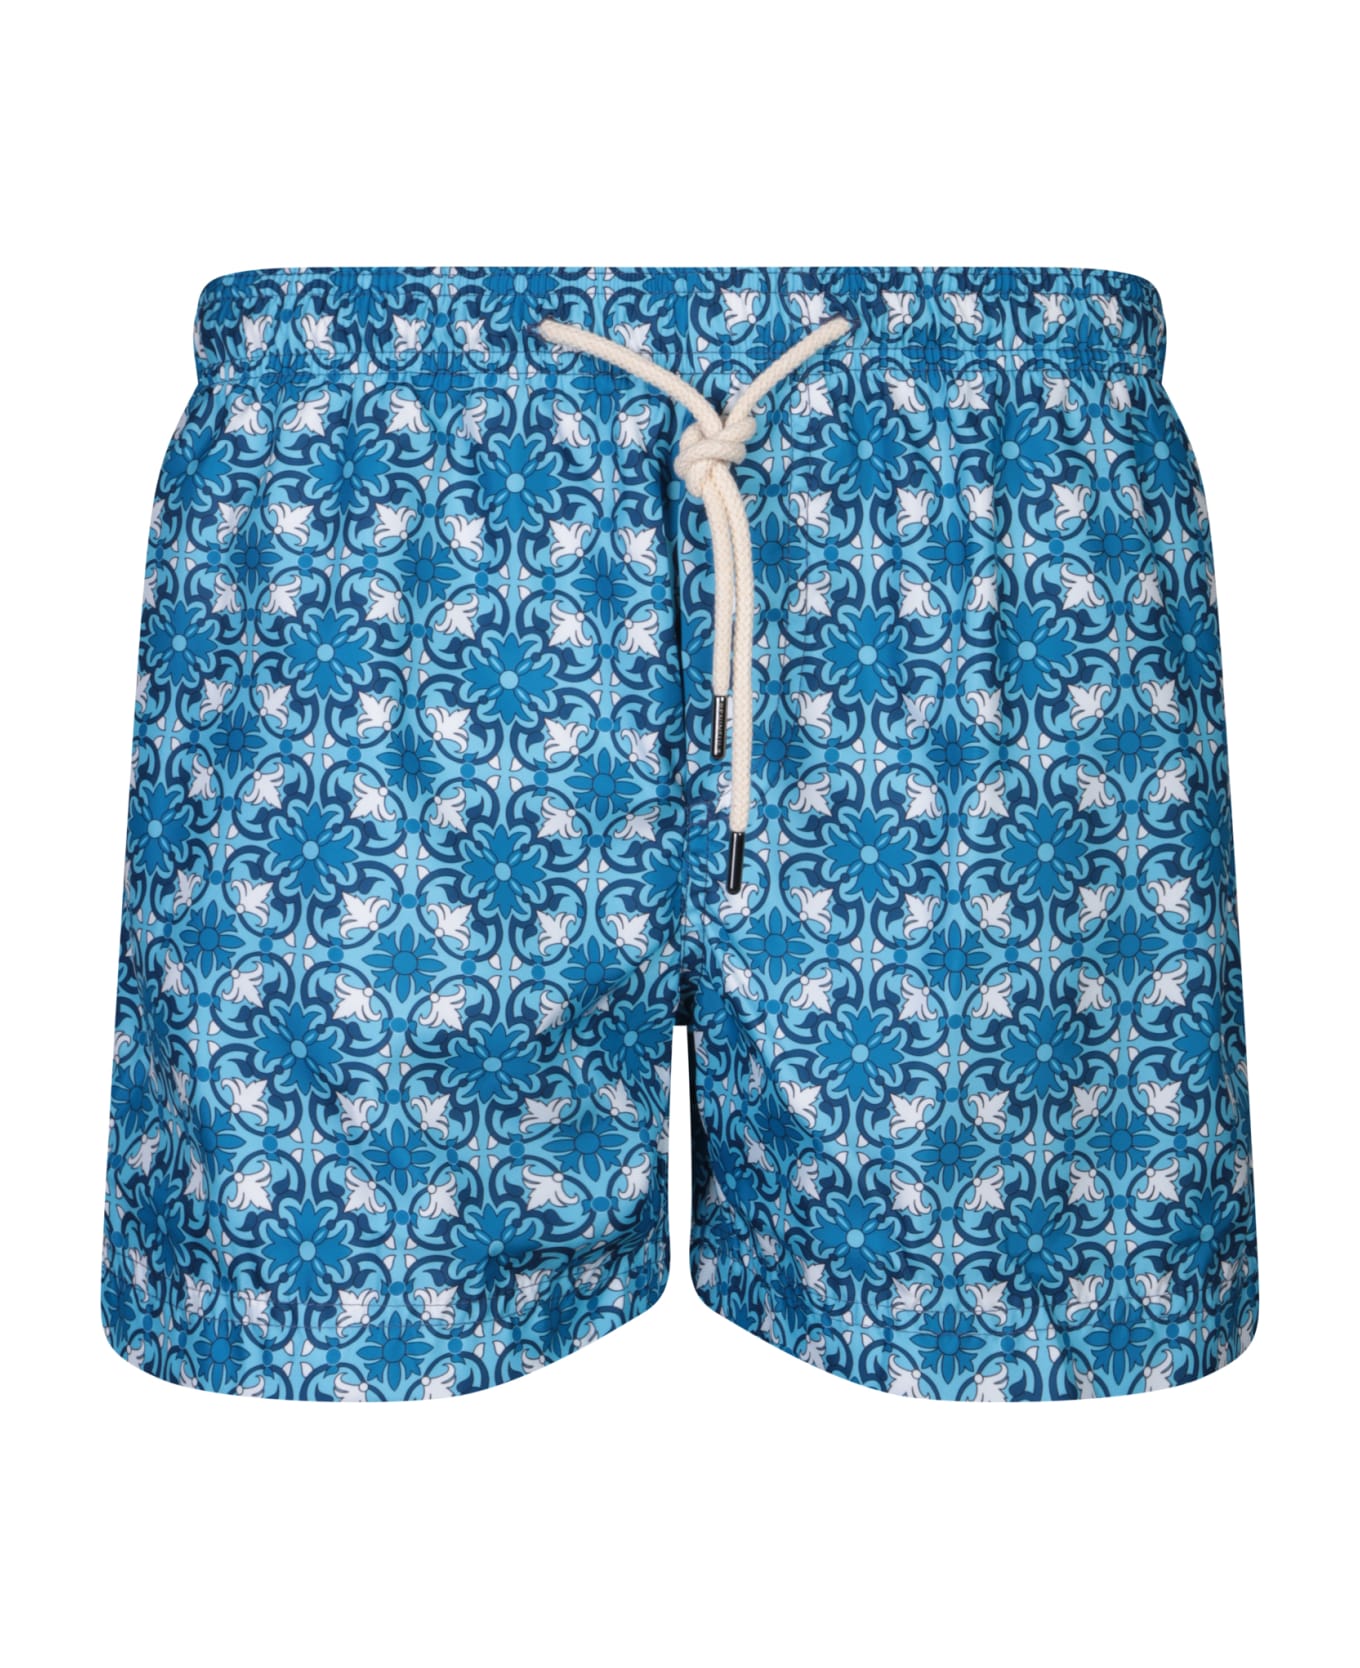 Peninsula Swimwear Patterned Blue Boxer Swim Shorts - Blue